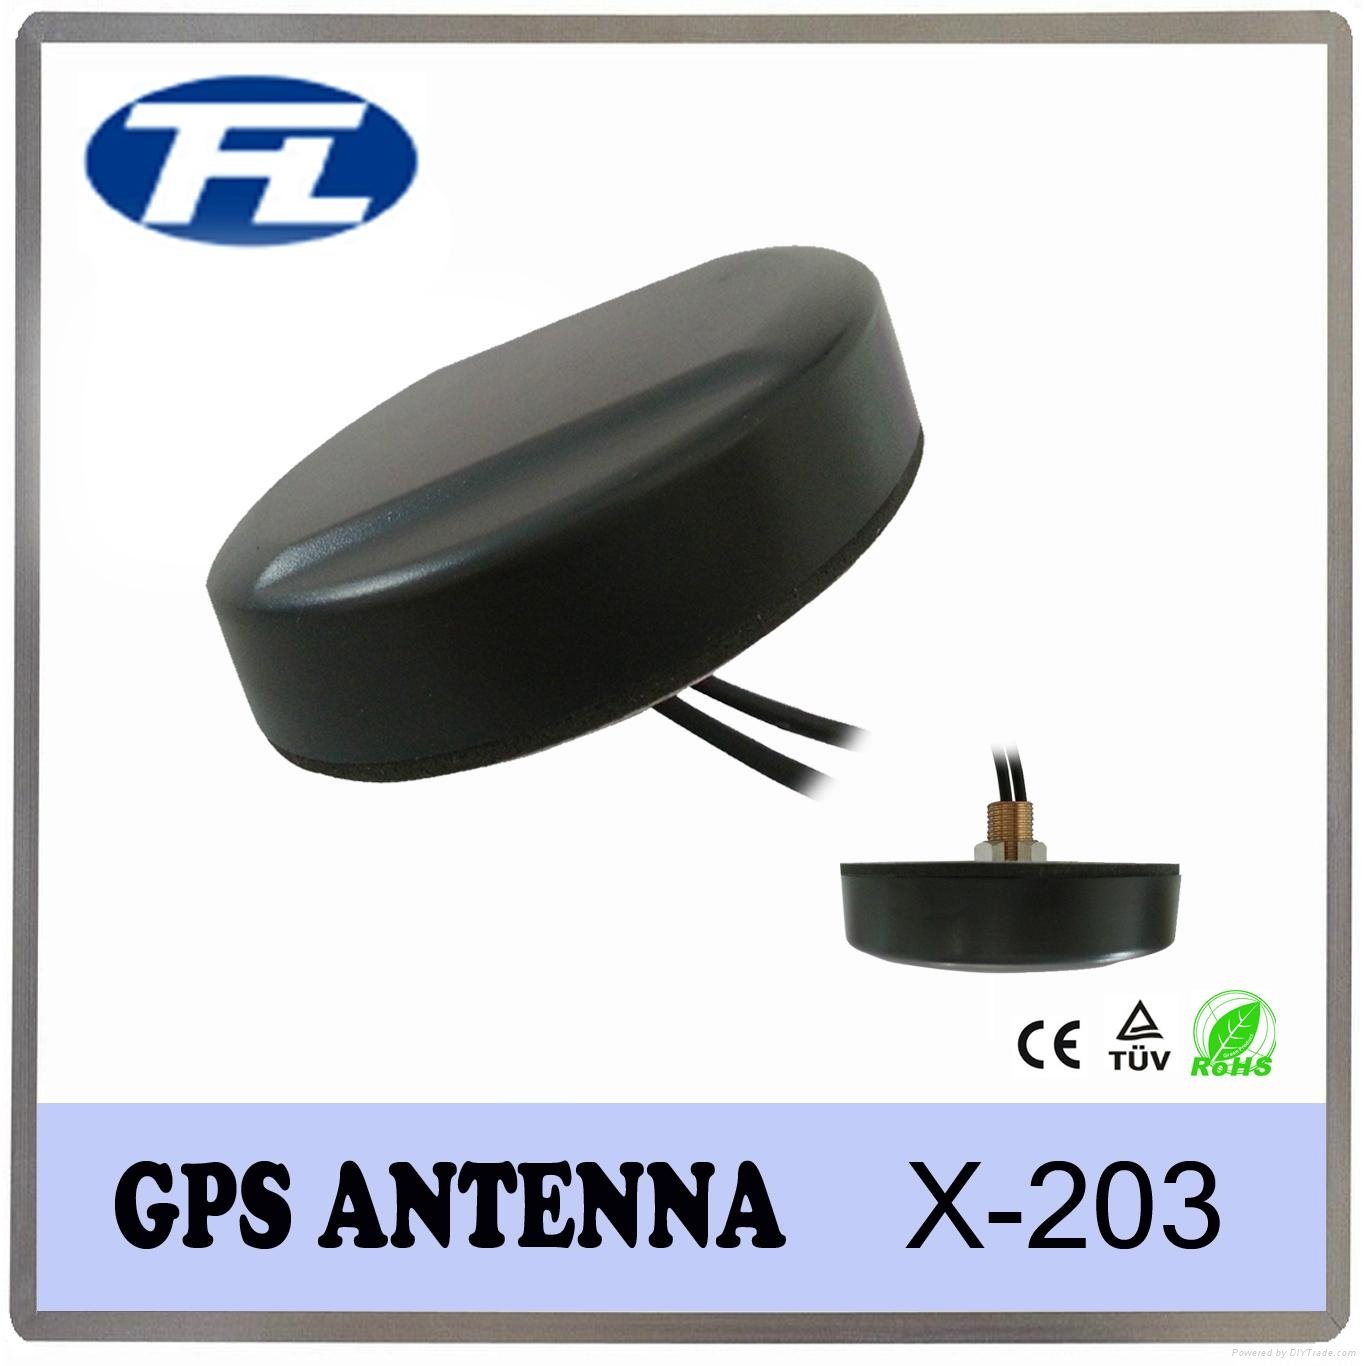 Magnet/Adhesive/Screw mount quad band GPS/GSM combination antenna 5